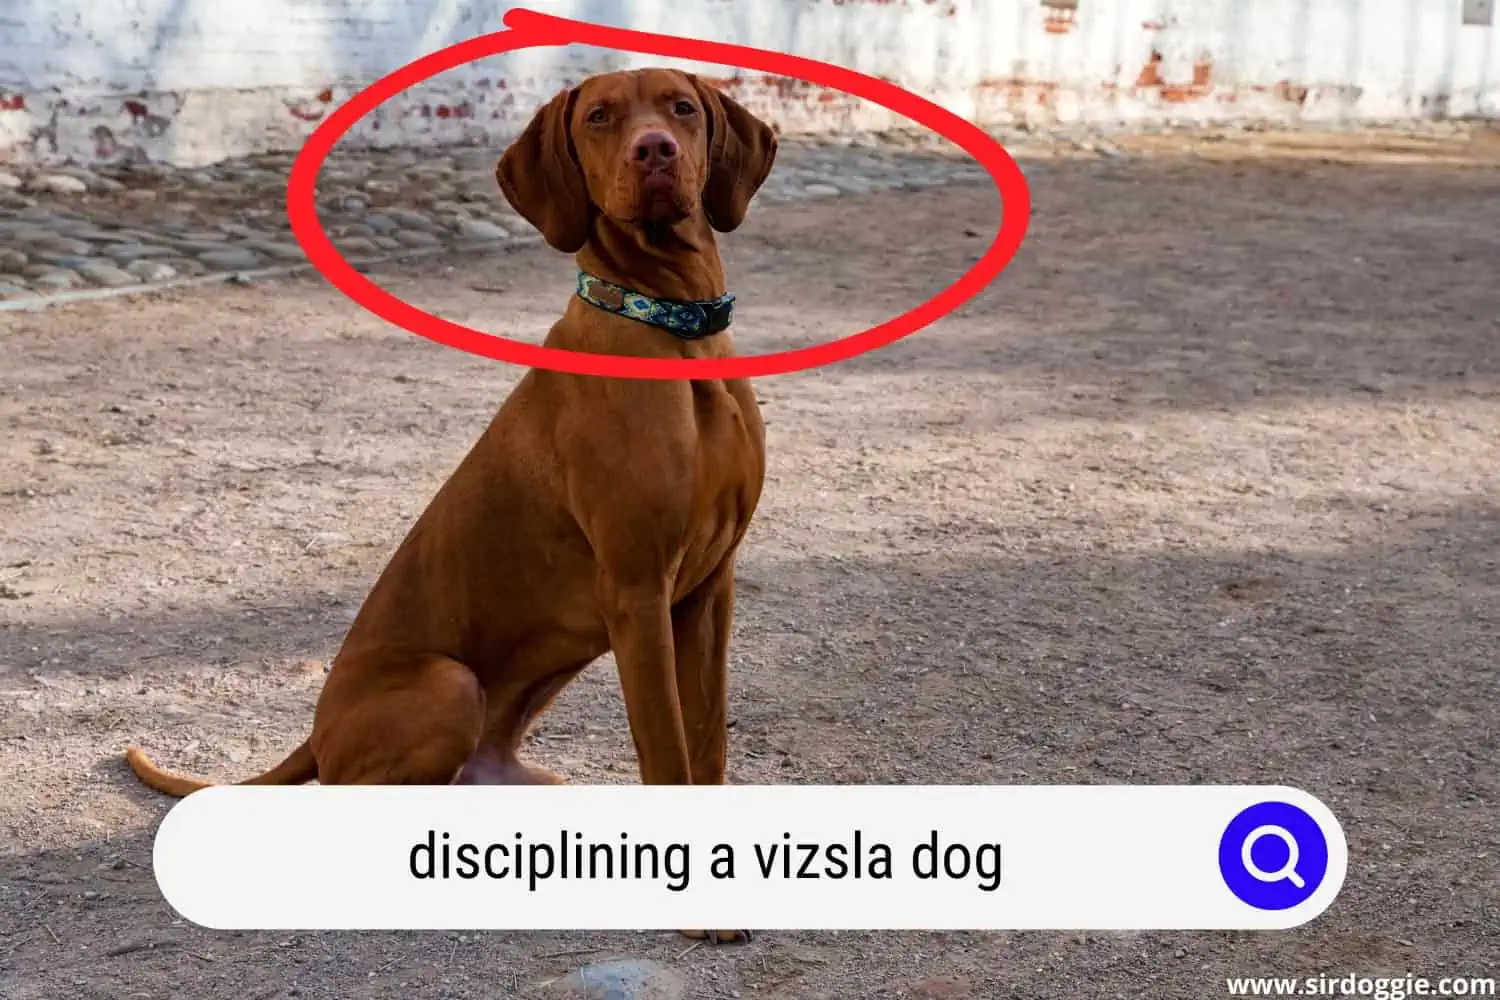 A disciplined vizsla dog